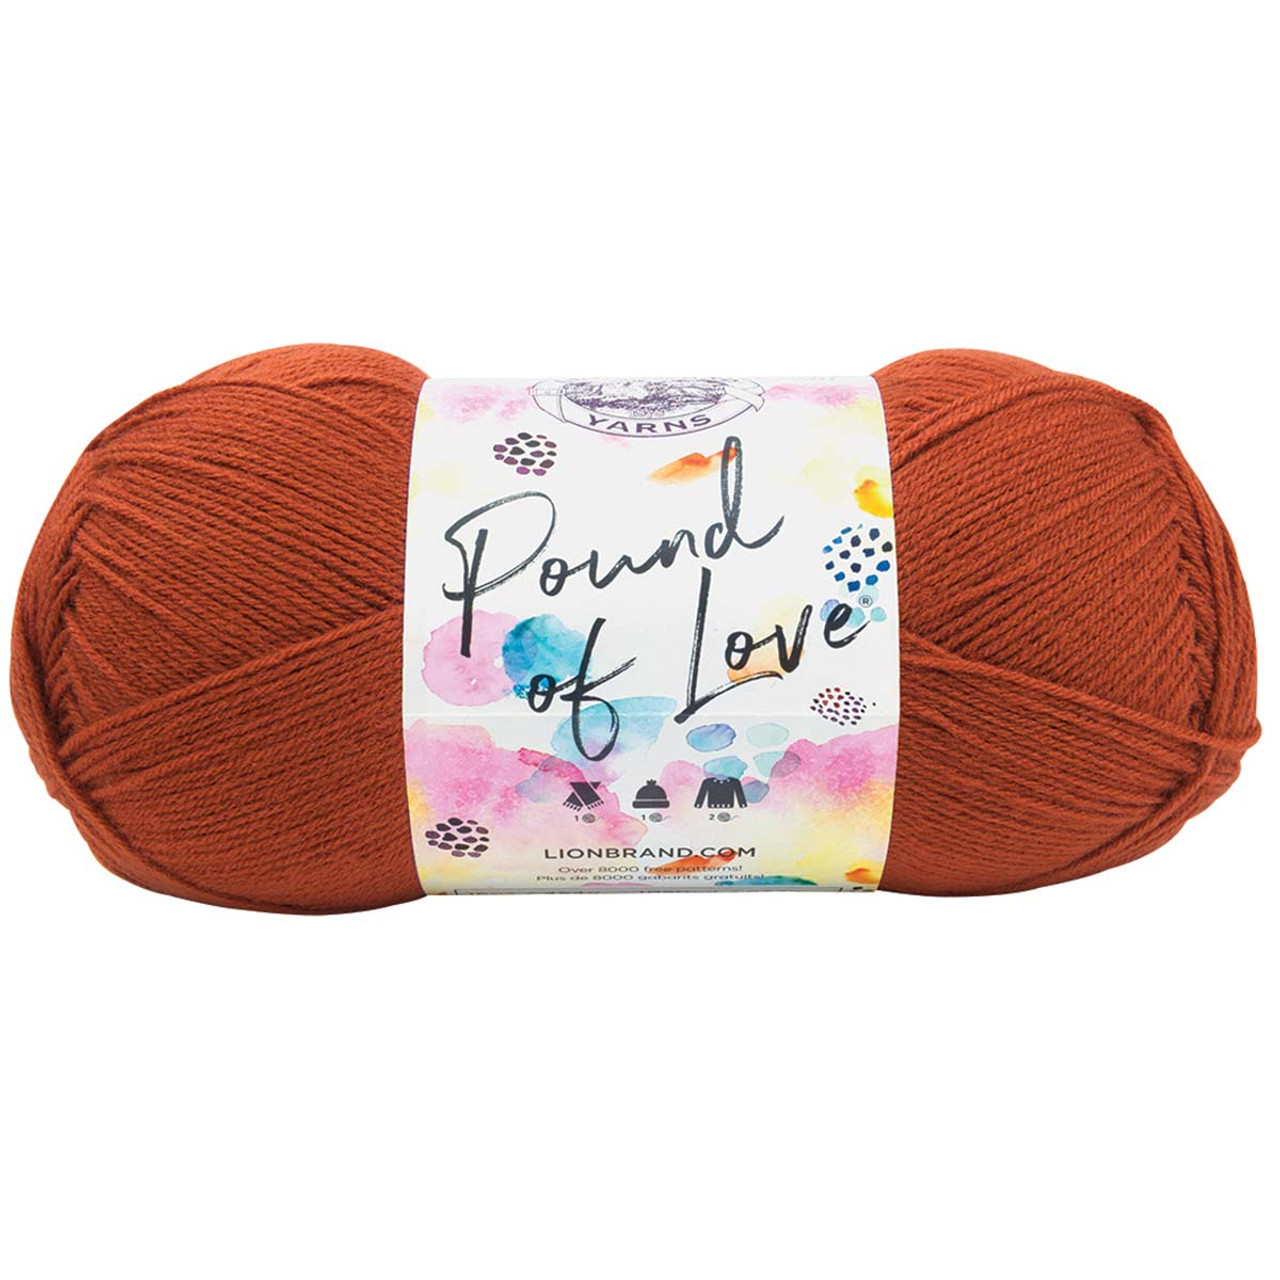  Lion Brand Yarn Pound of Love, Value Yarn, Large Yarn for  Knitting and Crocheting, Craft Yarn, Pastel Pink